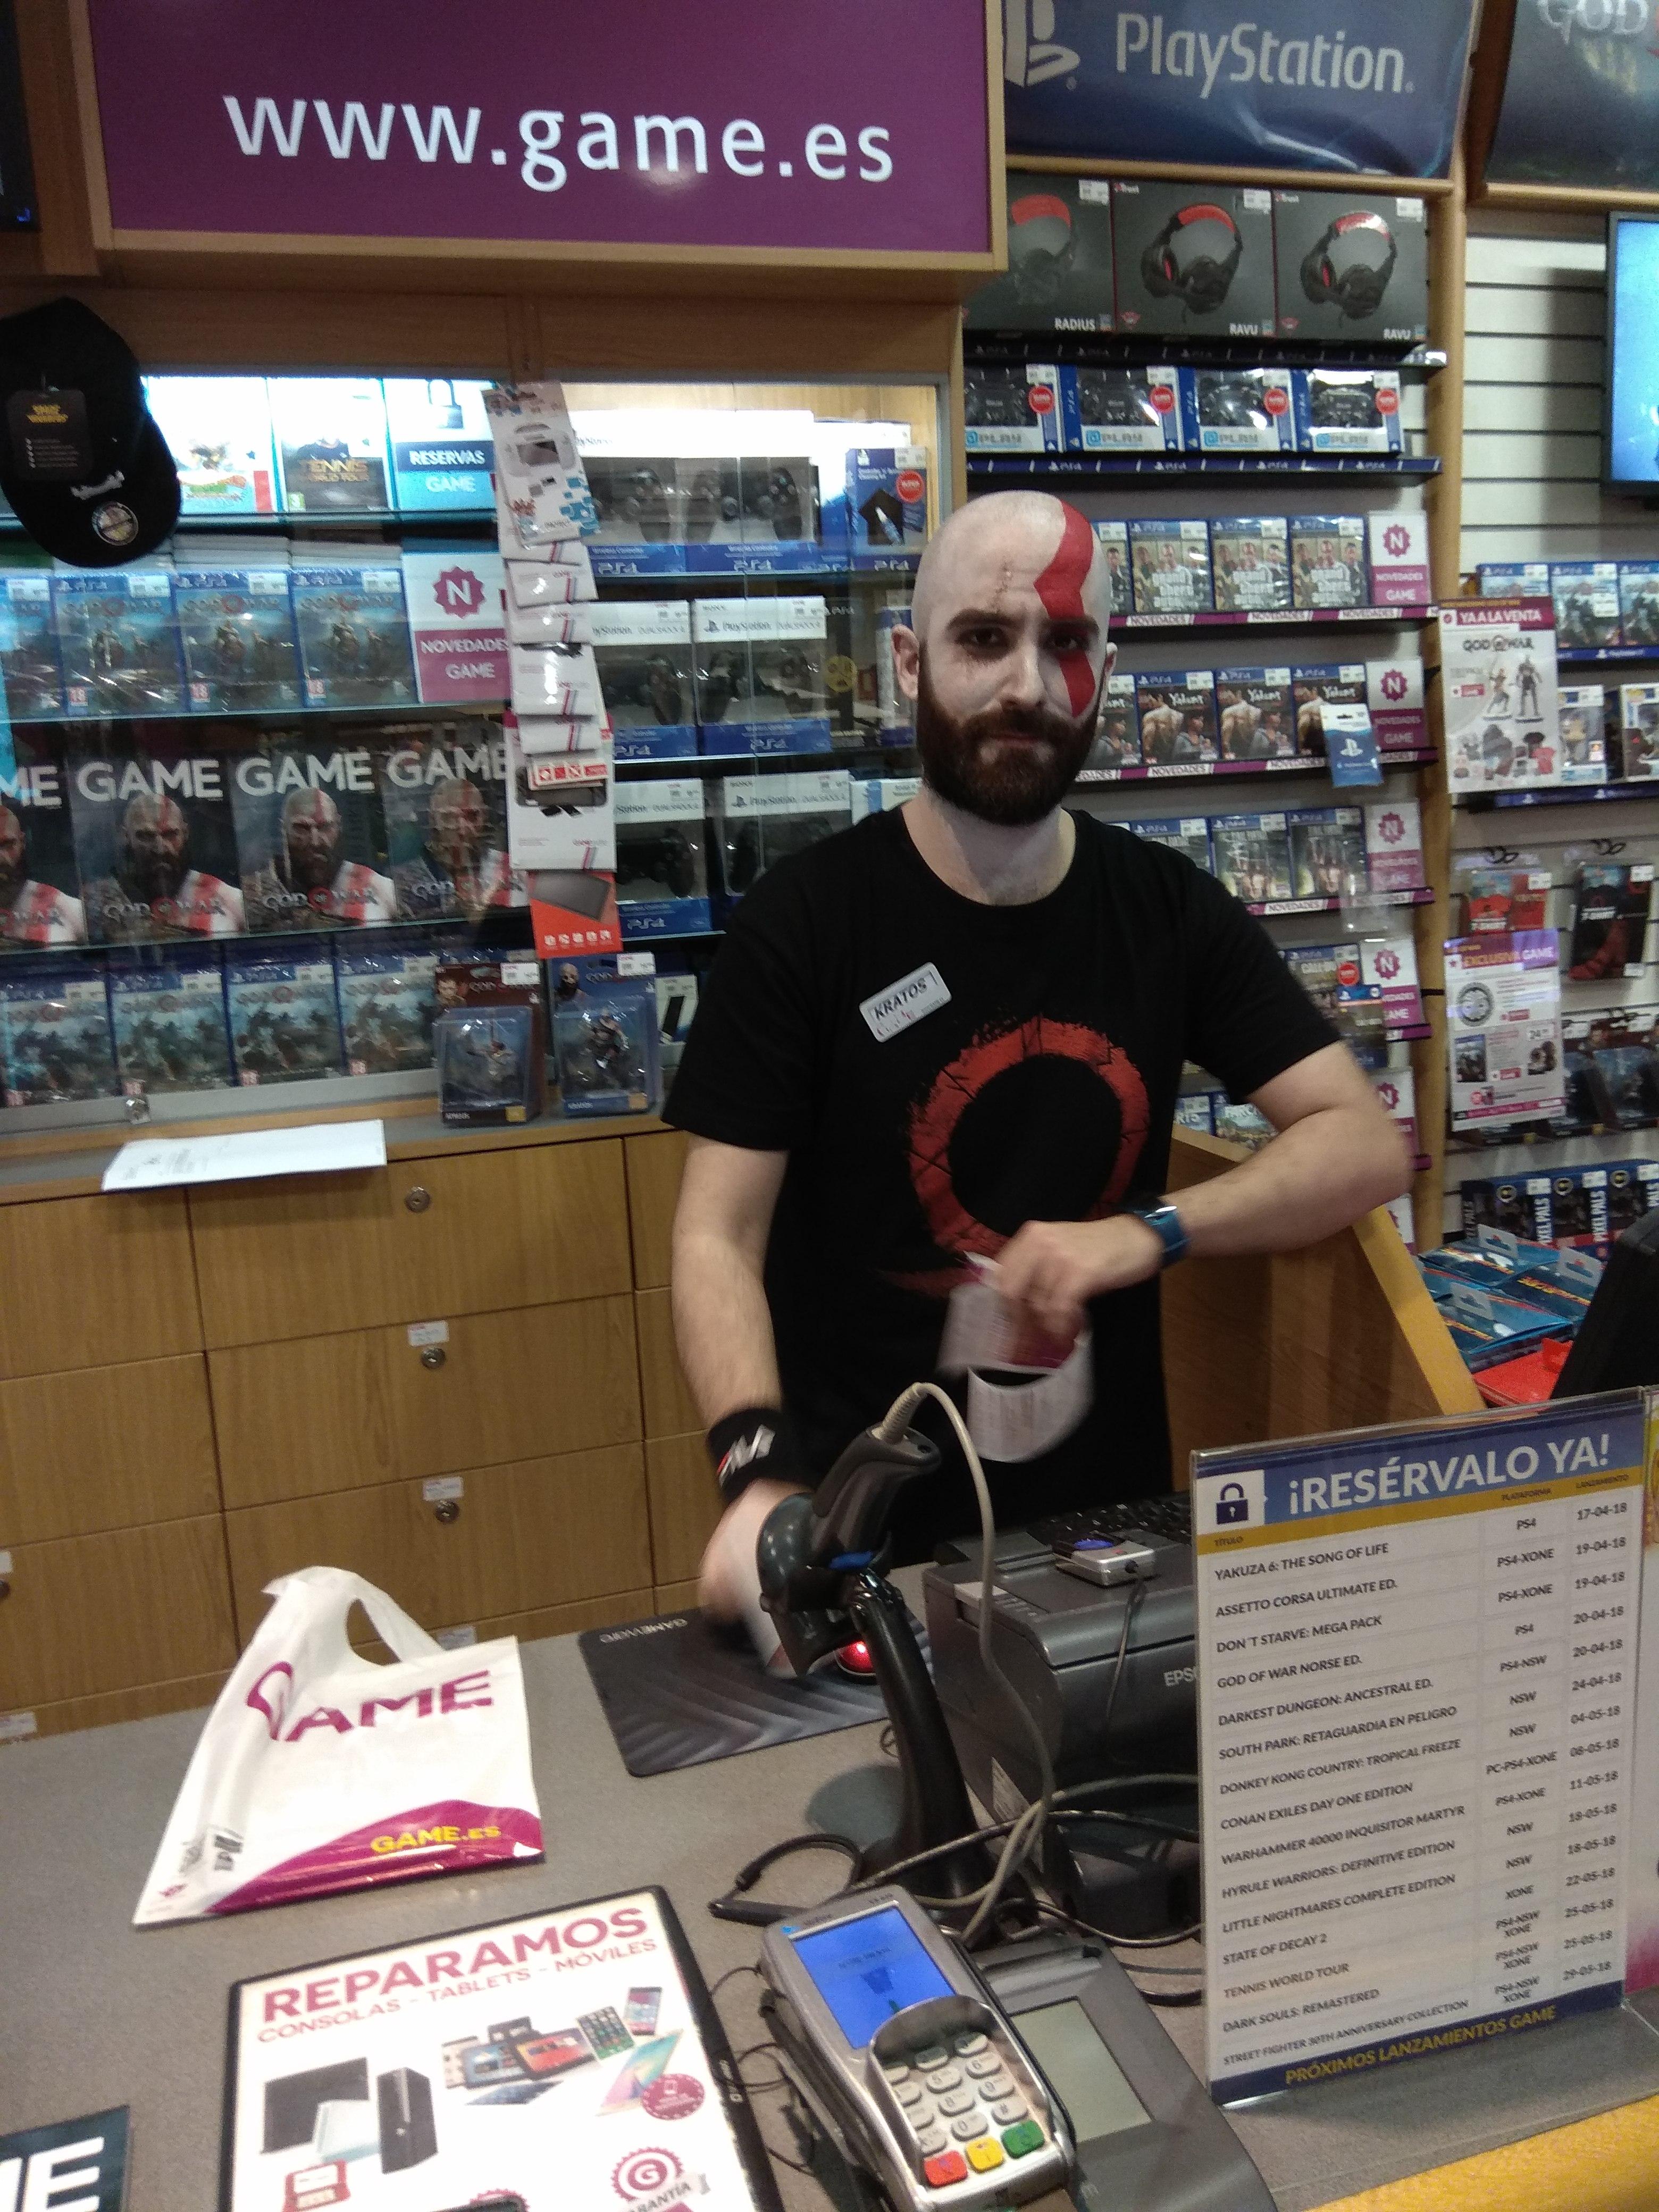 reddit kratos - PlayStation E Game Game Game Reservalo Ya! Reparamos 1E